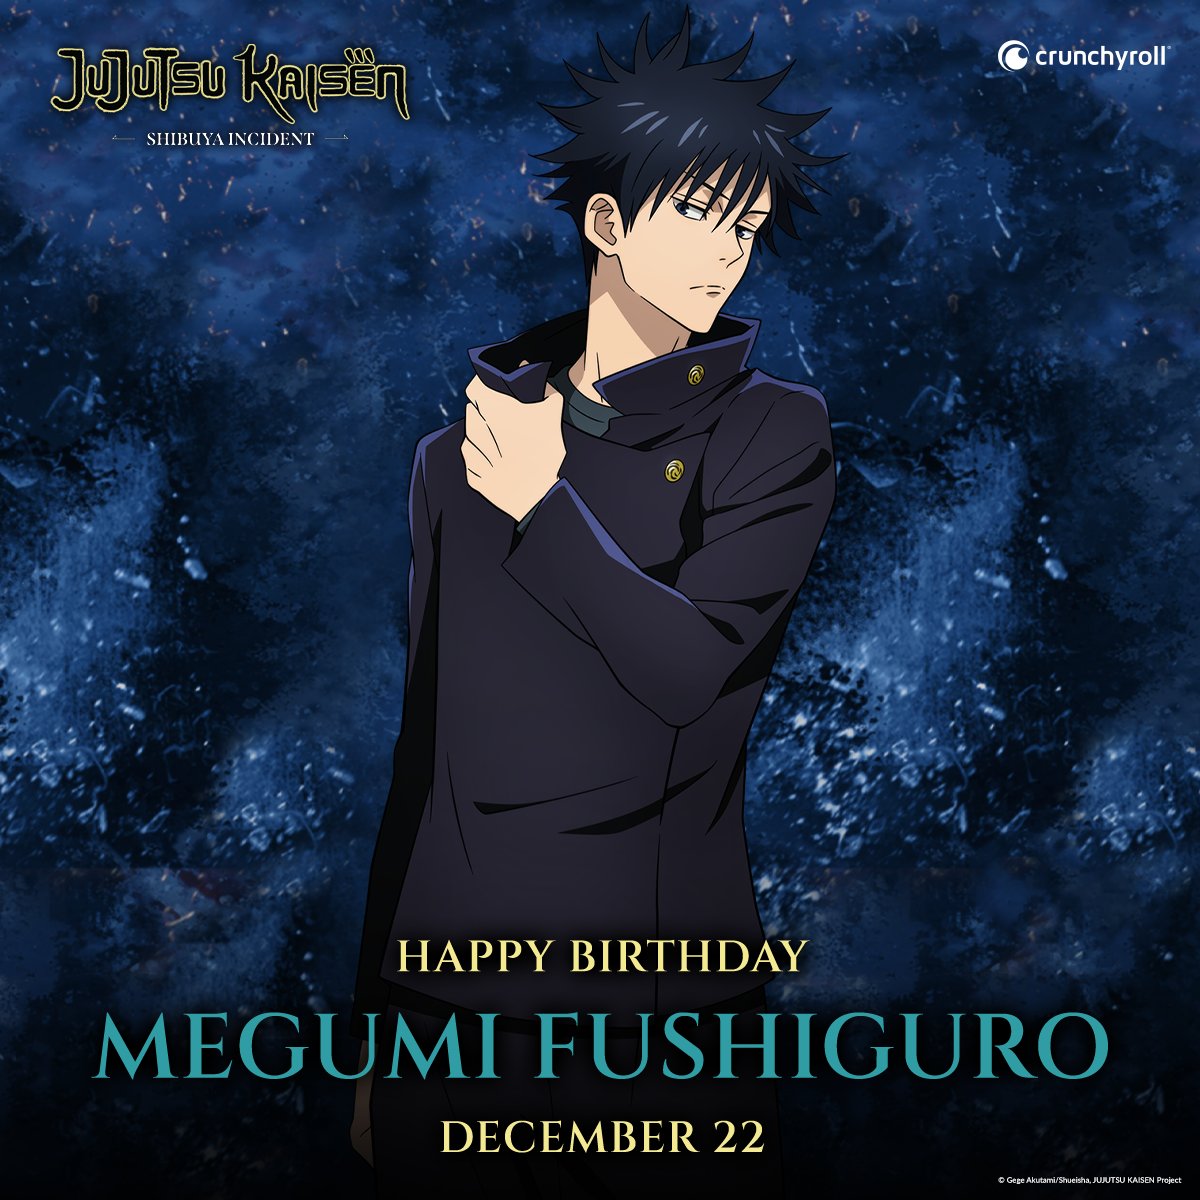 Happy birthday, Megumi Fushiguro 🎉 #JujutsuKaisen